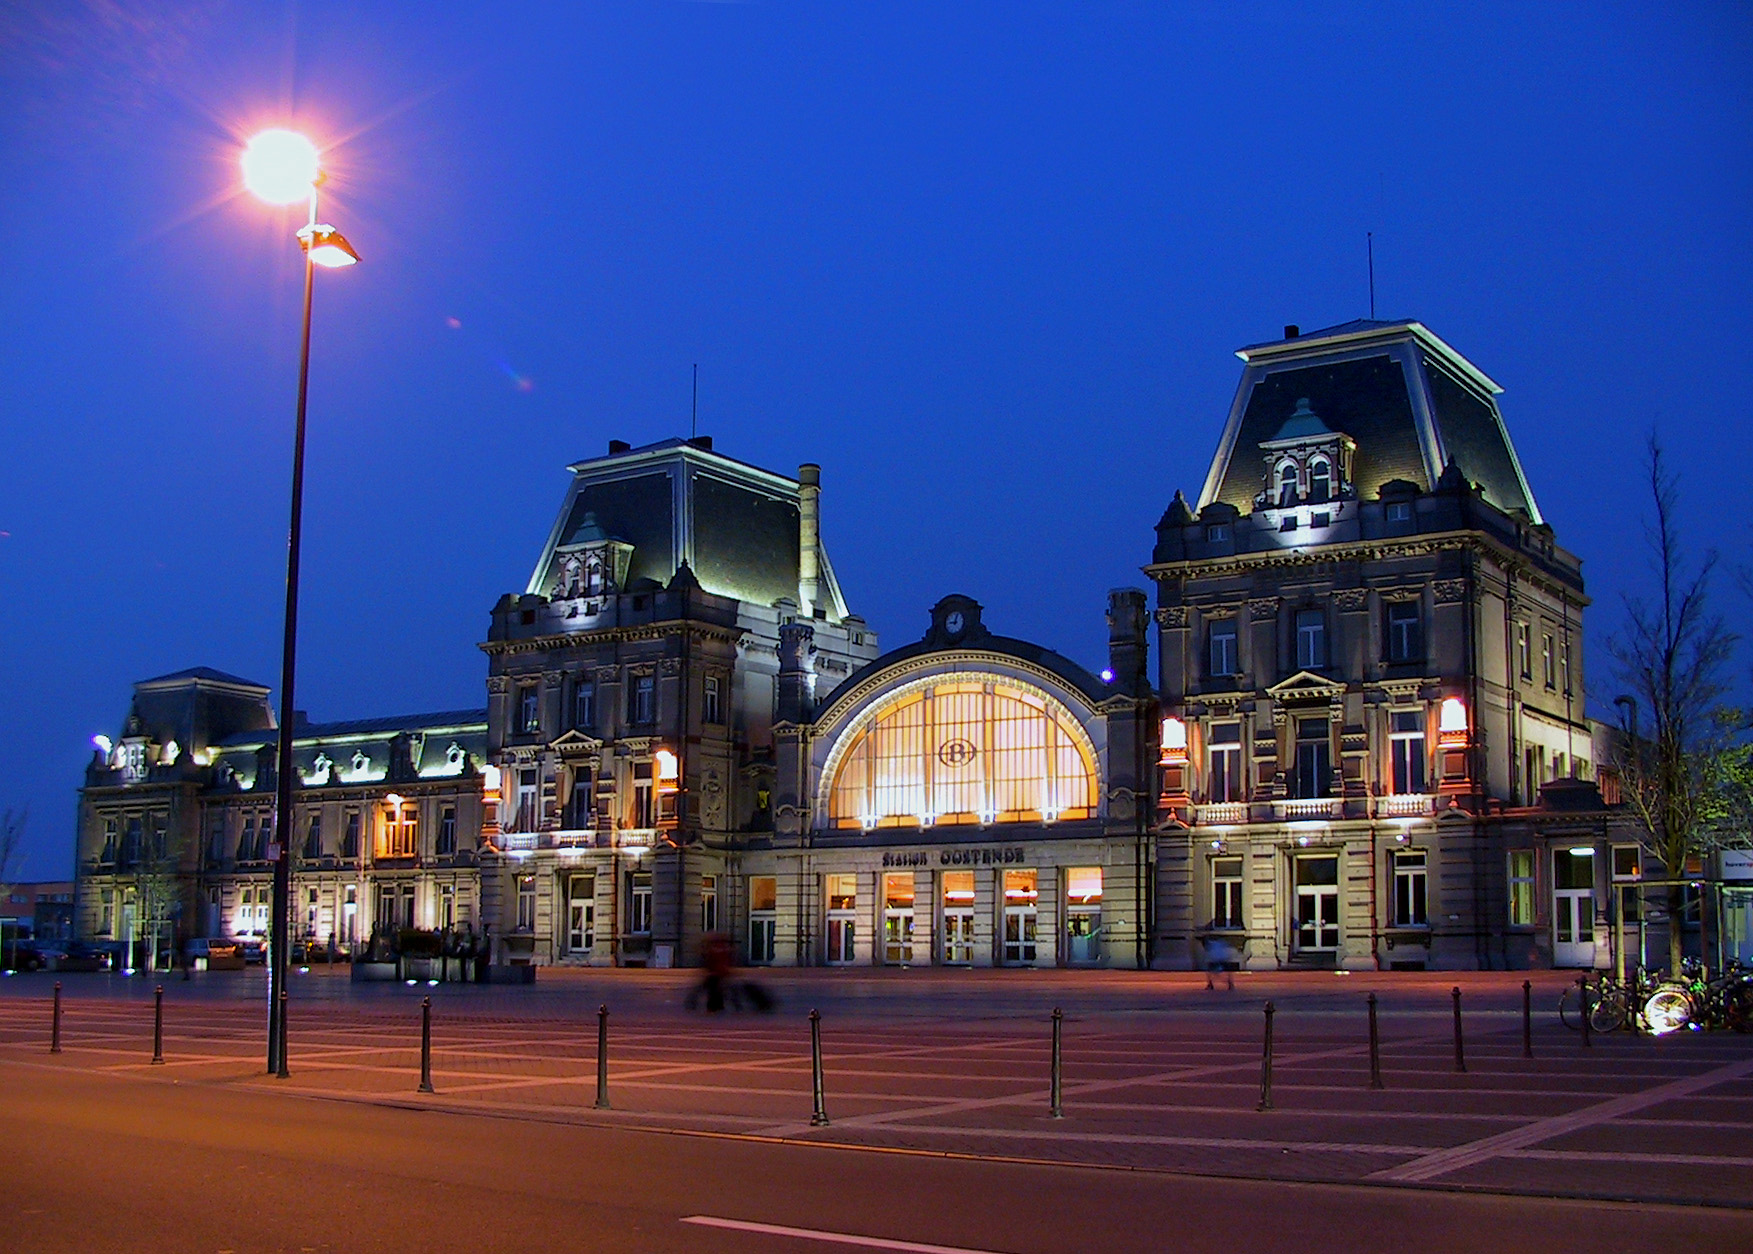 [Ostend railway station. JMJ.   Canon powershot Pro 90. Digital camera Canon powershot Pro 90]